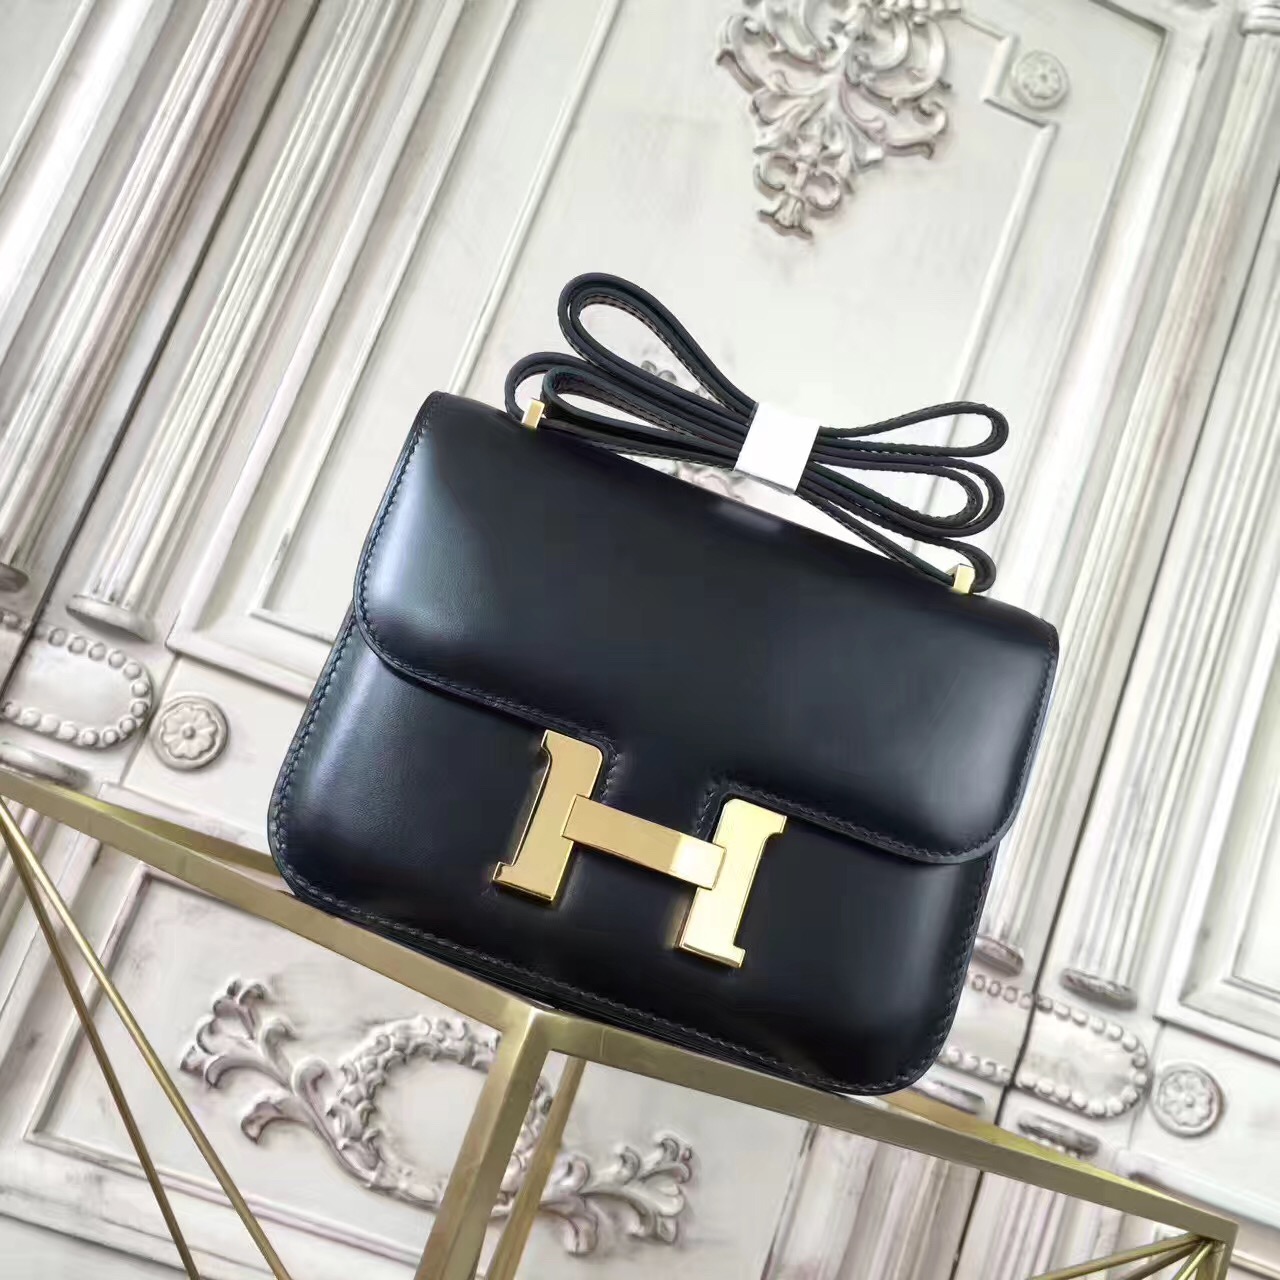 Hermes original box leather small constance bag C019 black